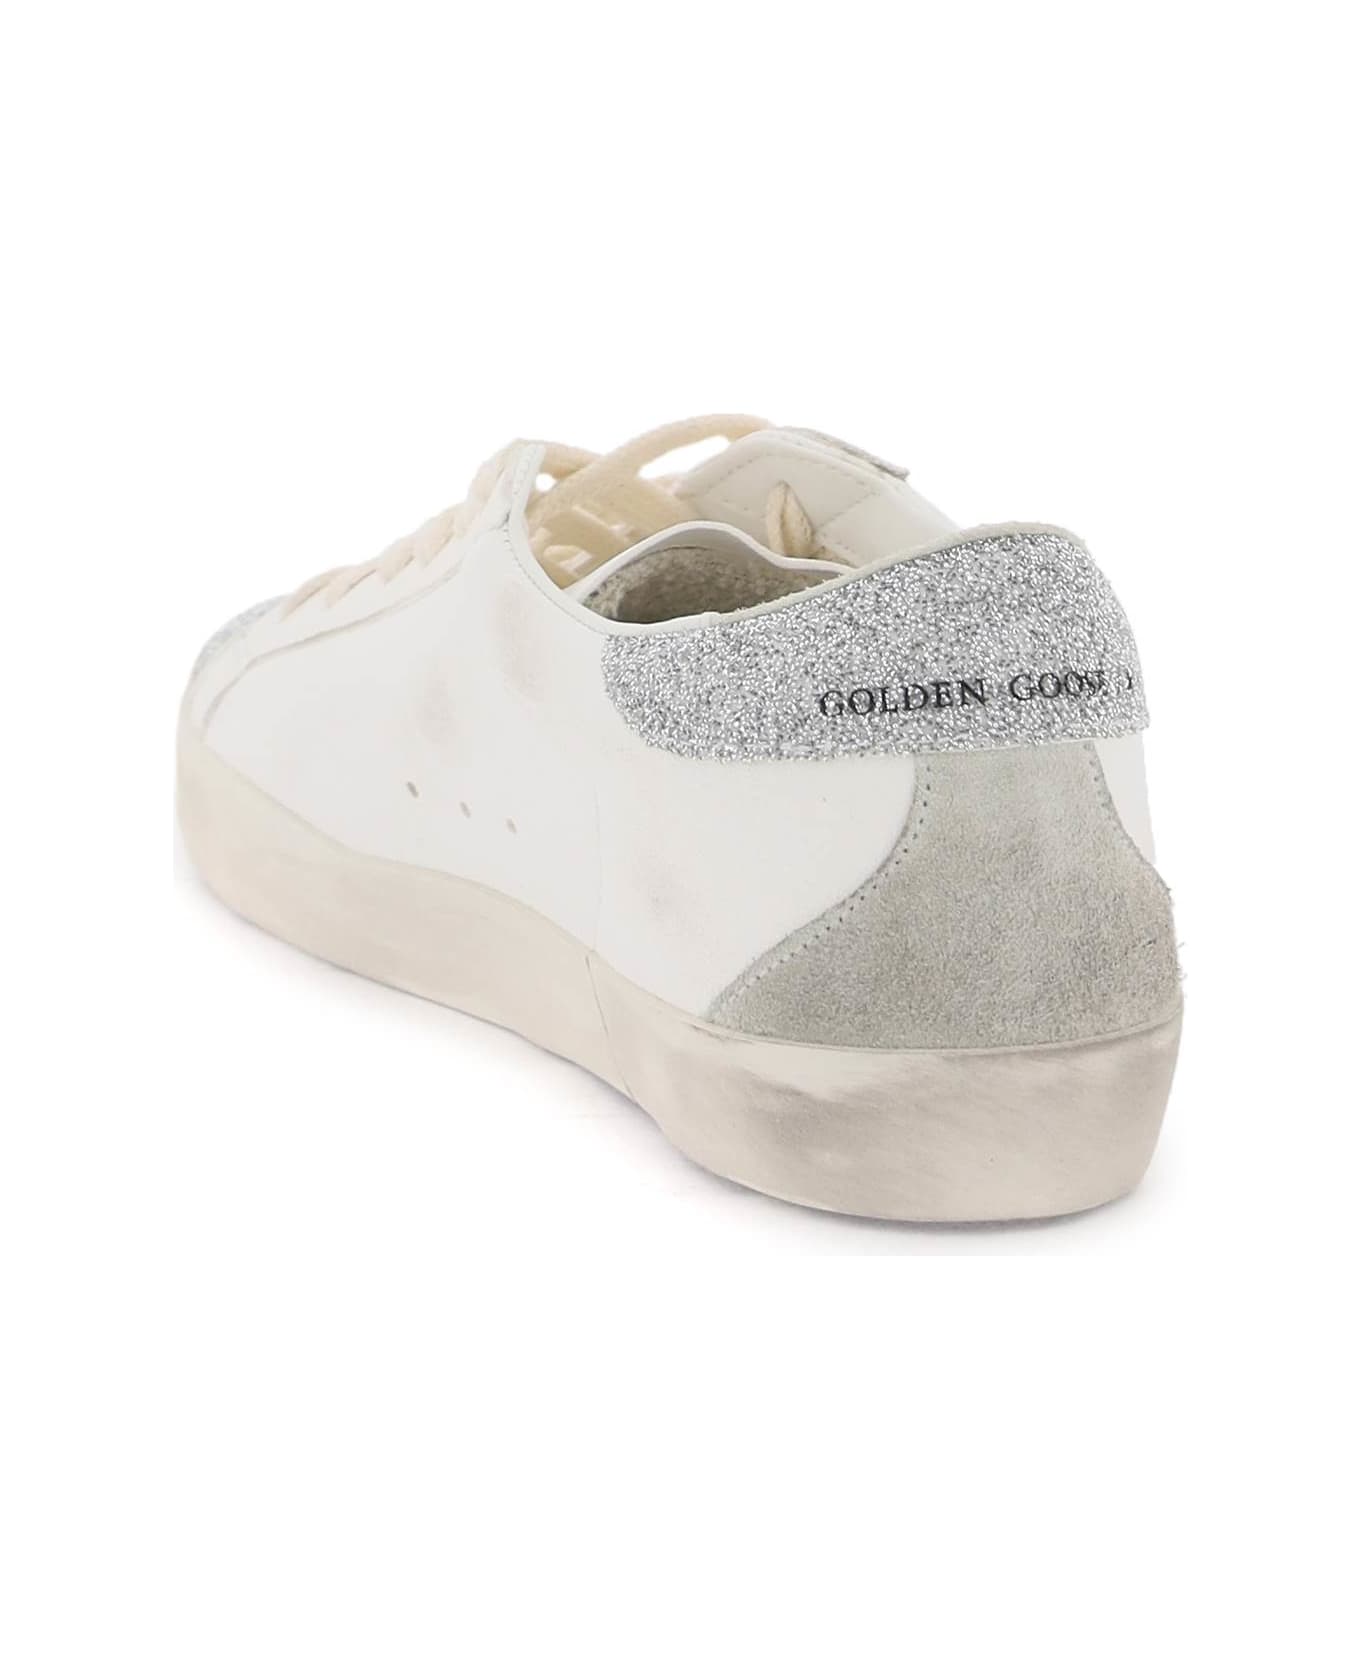 Golden Goose Super-star Sneakers - Cream/silver/ice スニーカー